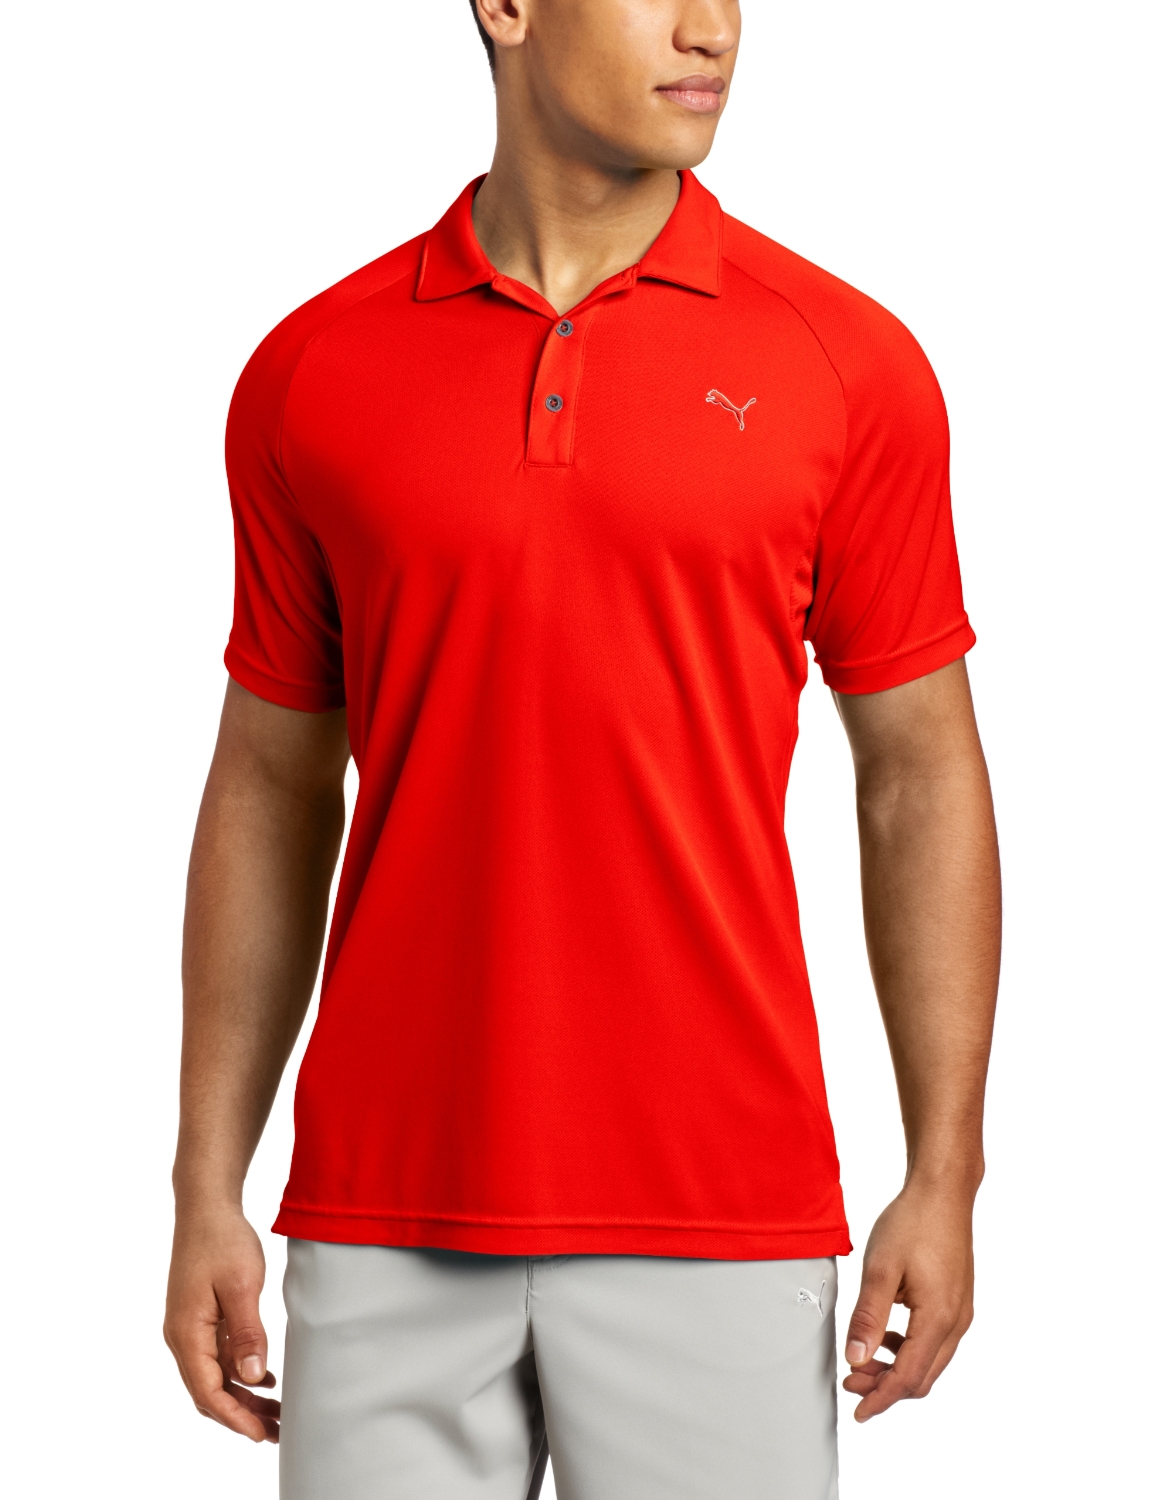 Buy Mens Puma Golf Polo Shirts Lowest Prices!